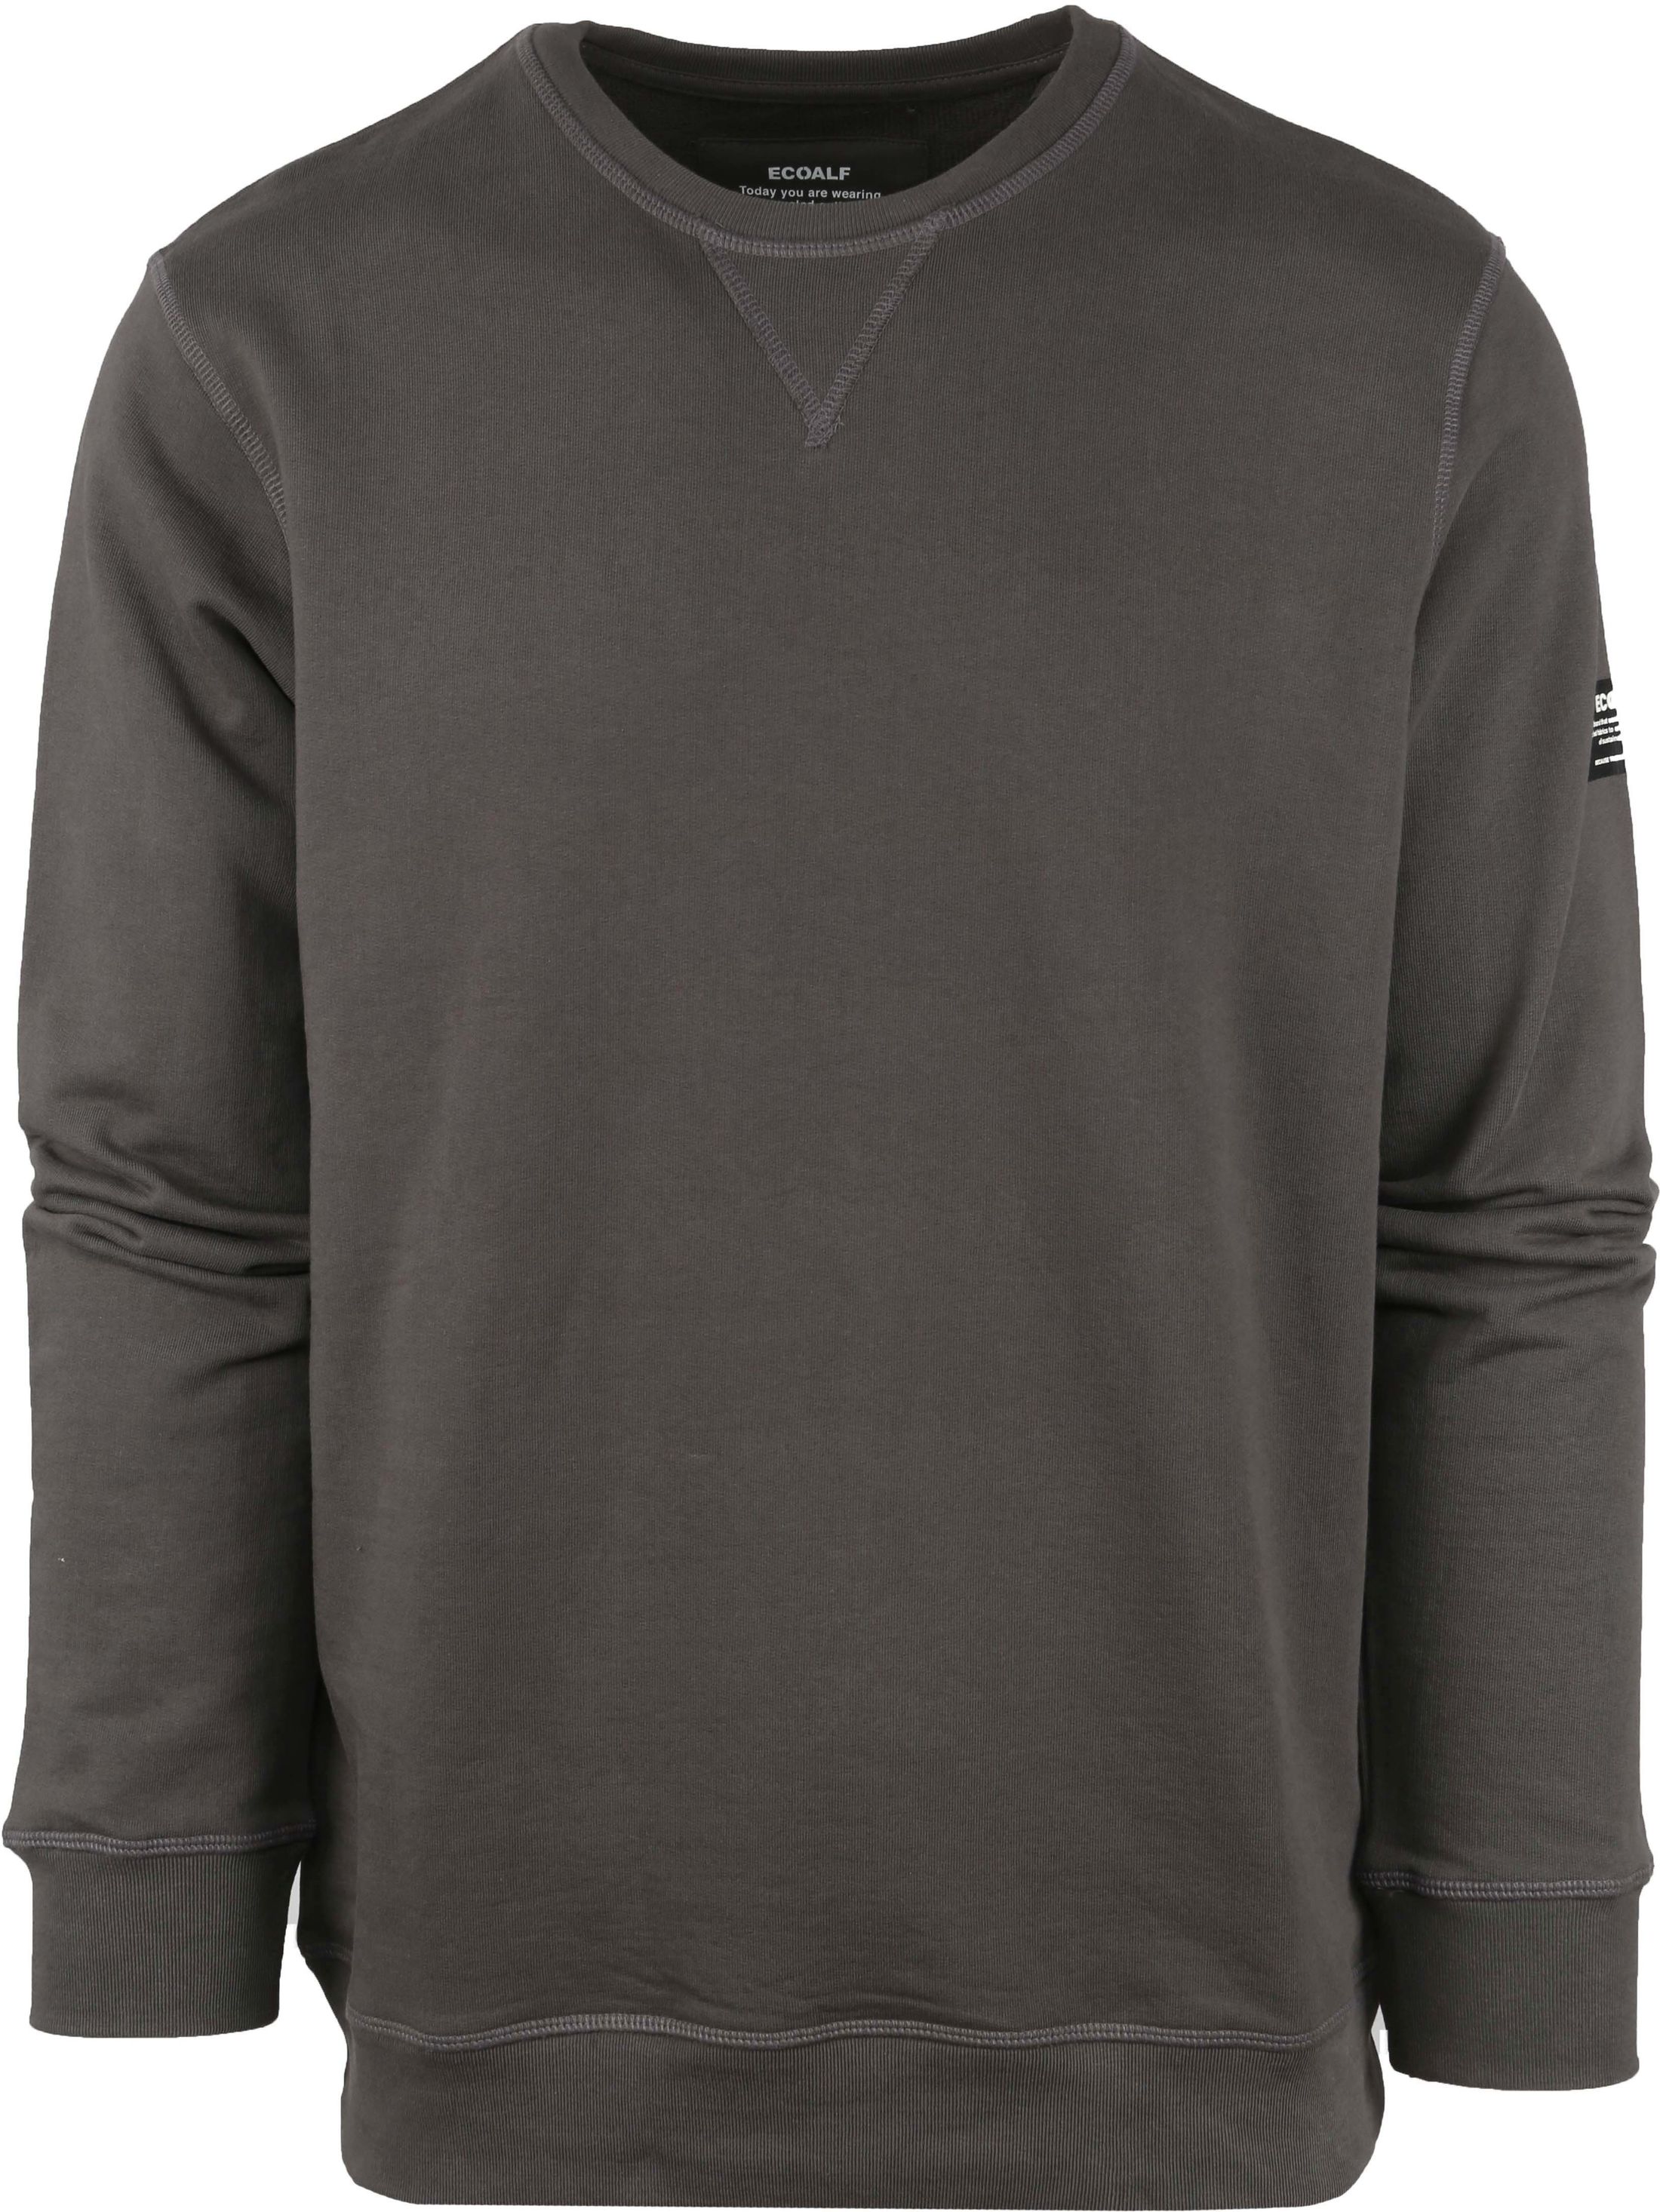 Ecoalf San Diego Sweater Black size L